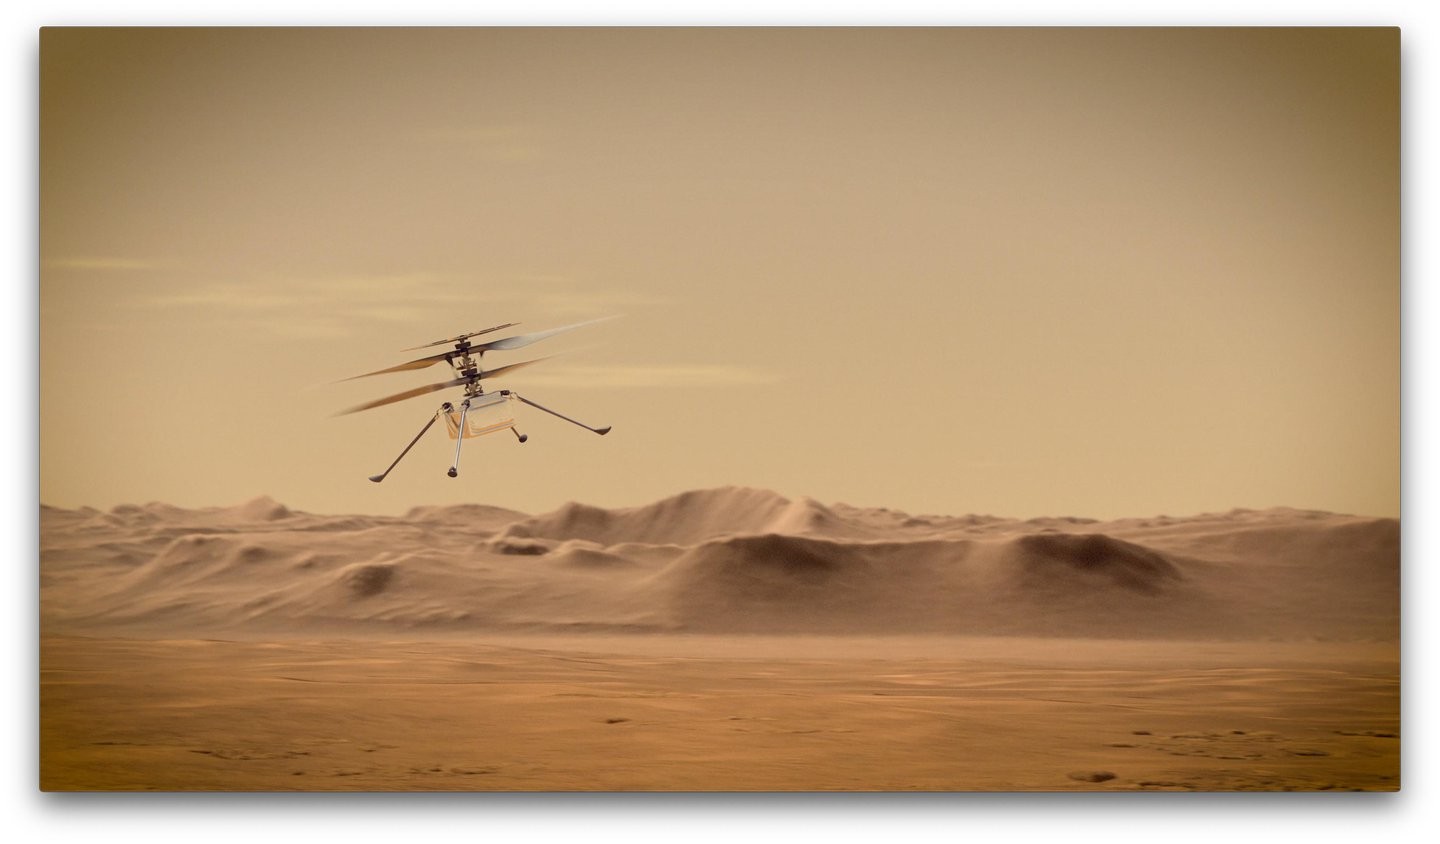 Marte: Creatividad con un vuelo récord de 25